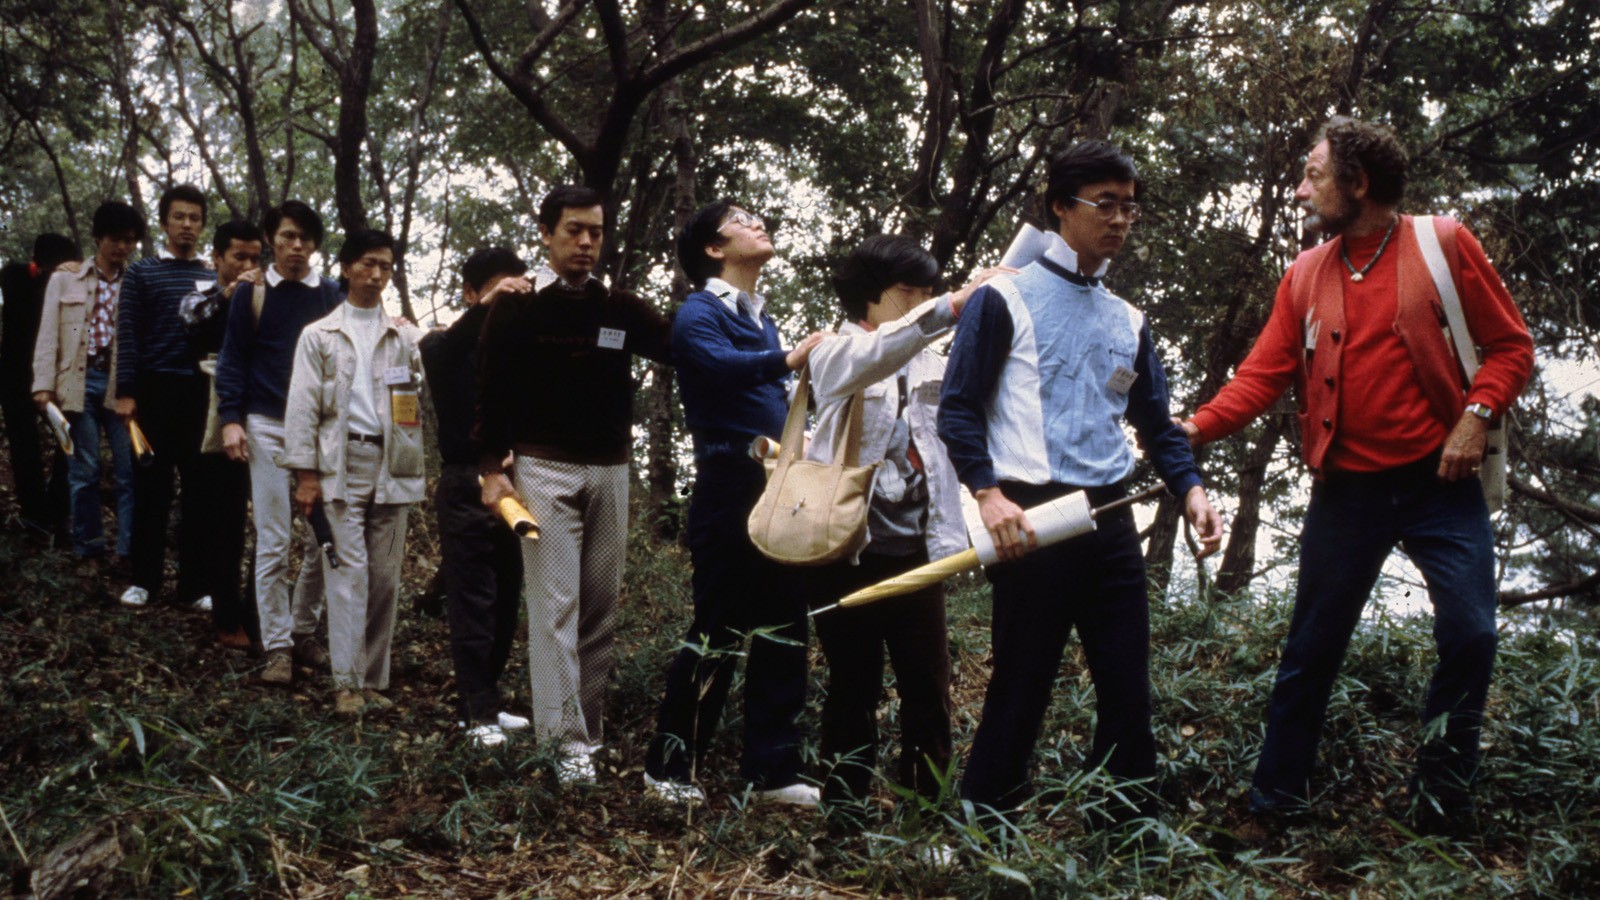 Lawrence Halprin (right) leads an awareness walk in Japan